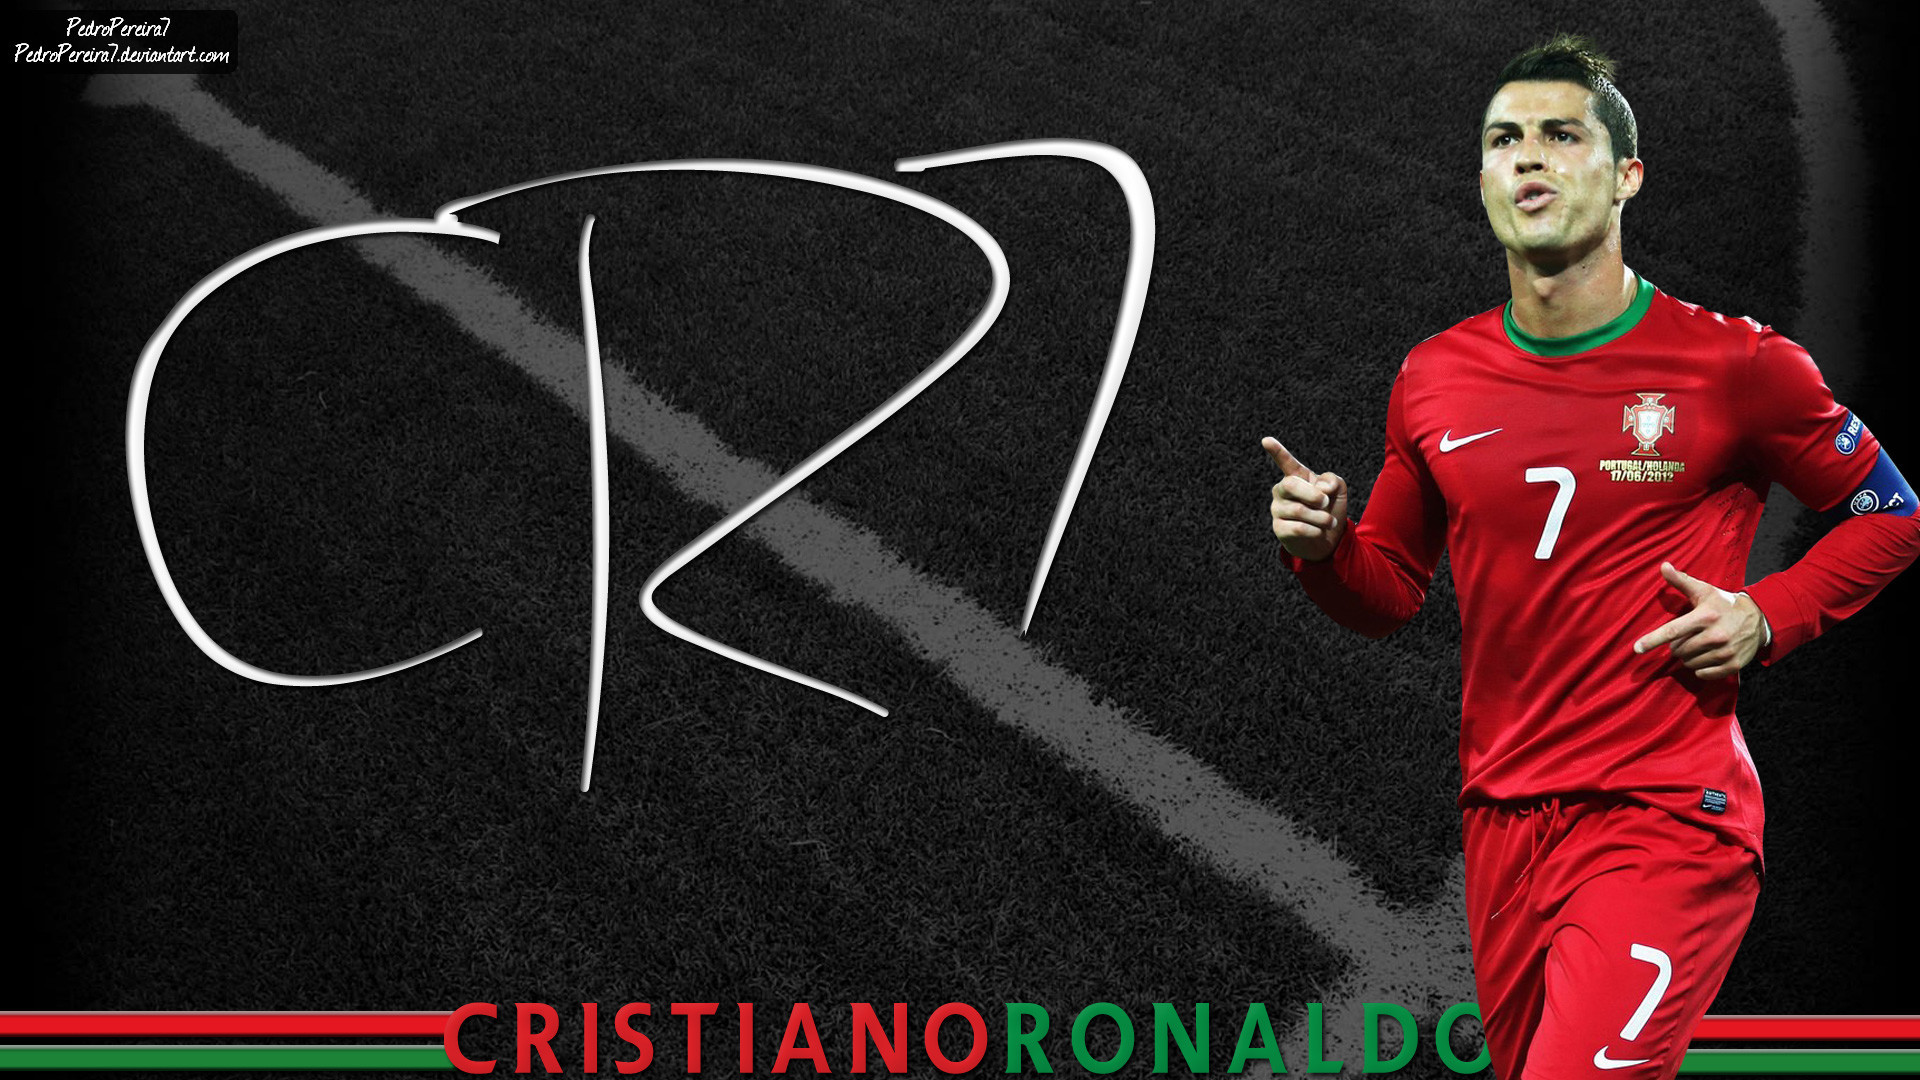 1920x1080  Cristiano Ronaldo 7 by PedroPereira7 Cristiano Ronaldo 7 by  PedroPereira7